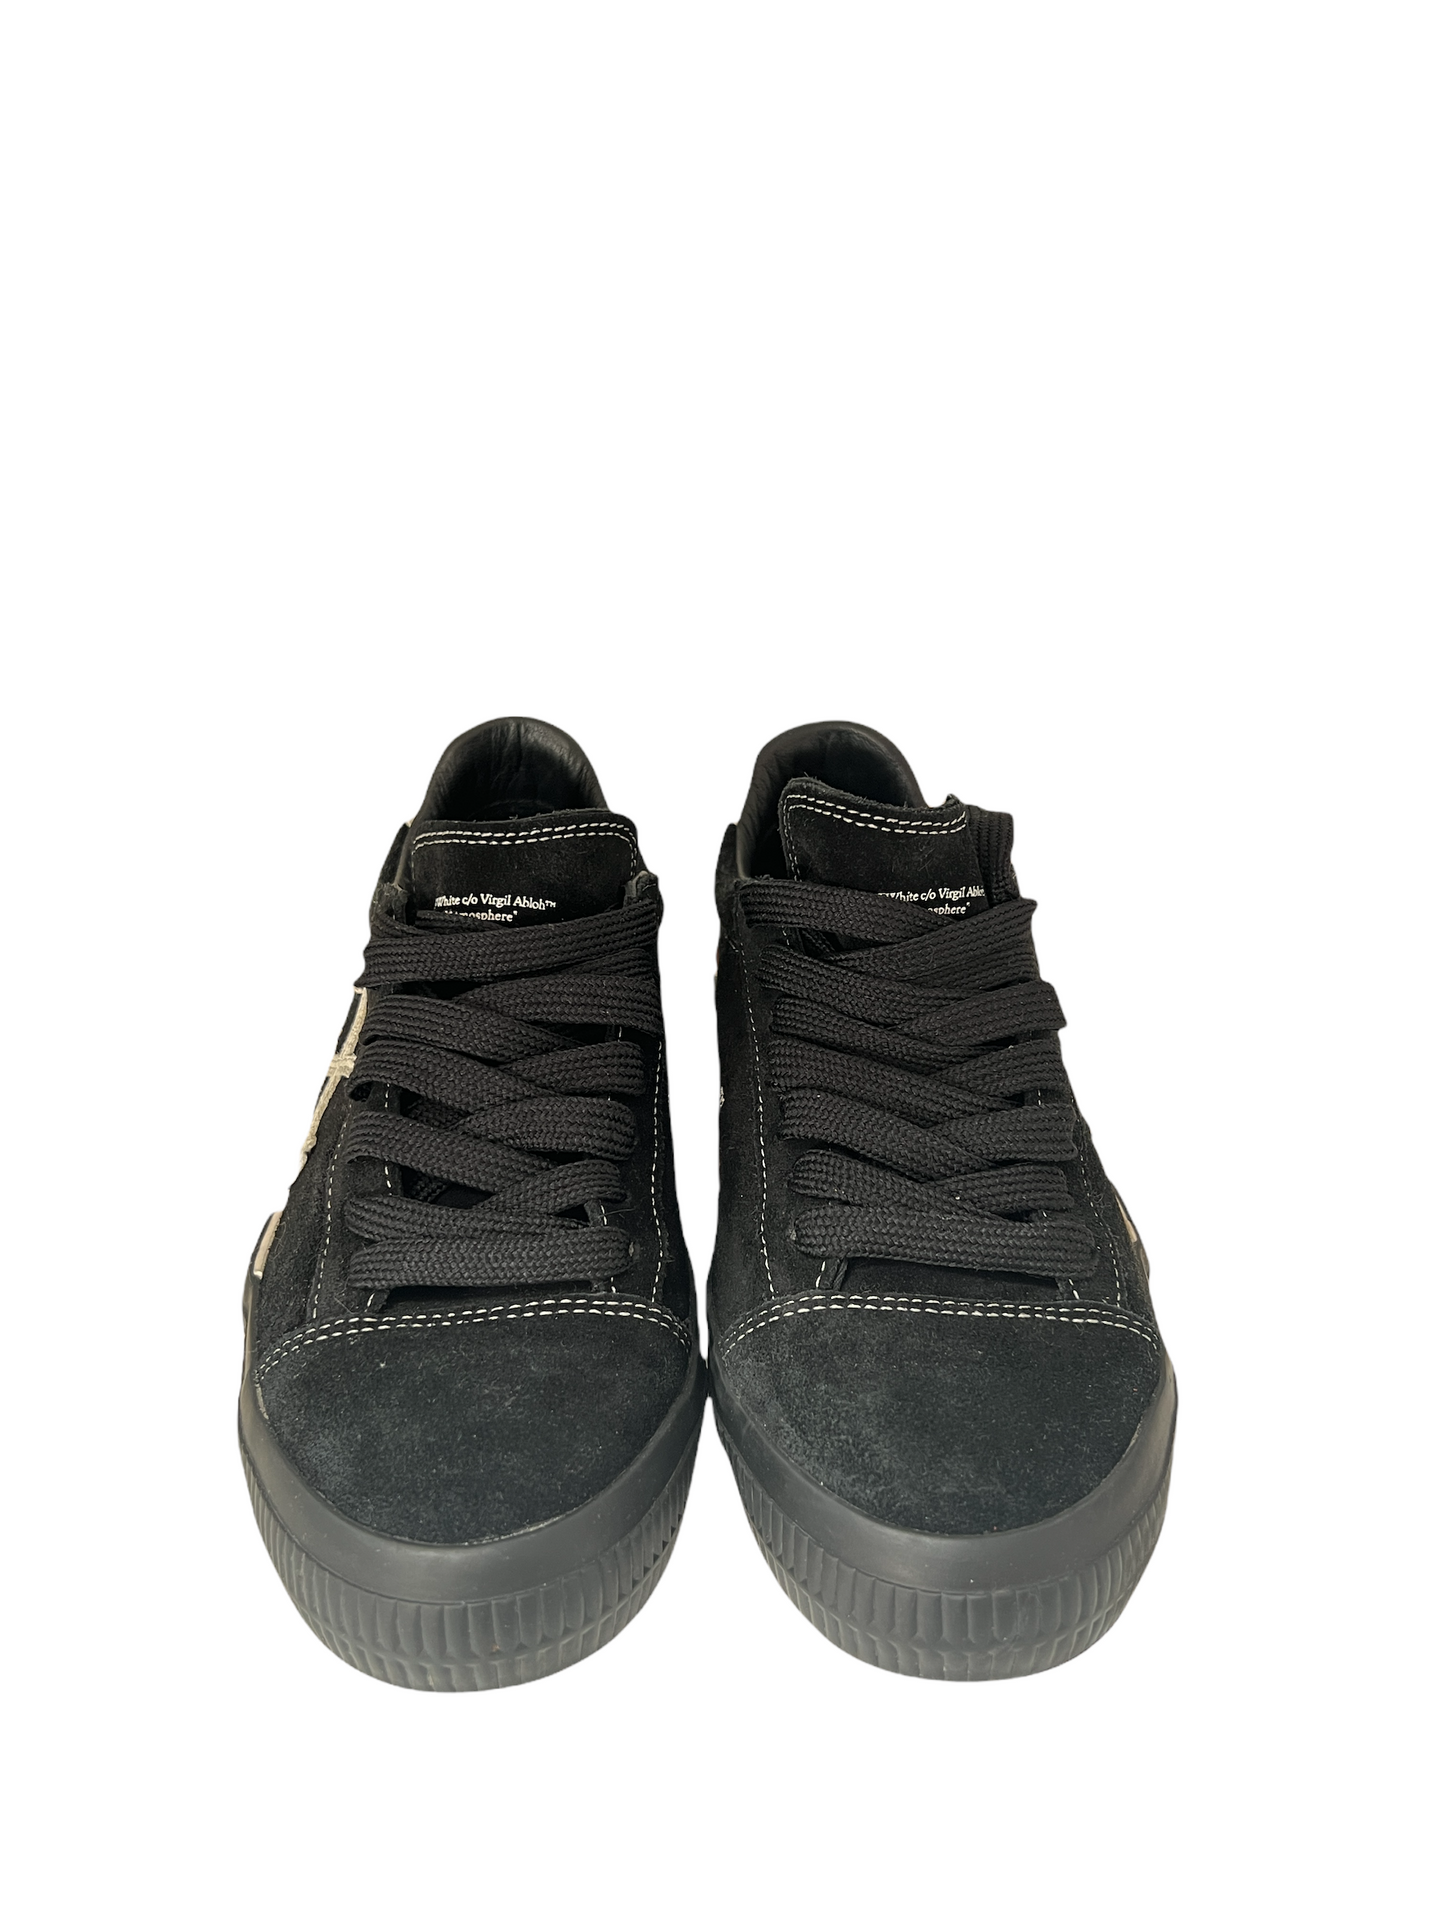 Black & White Sneakers - 8